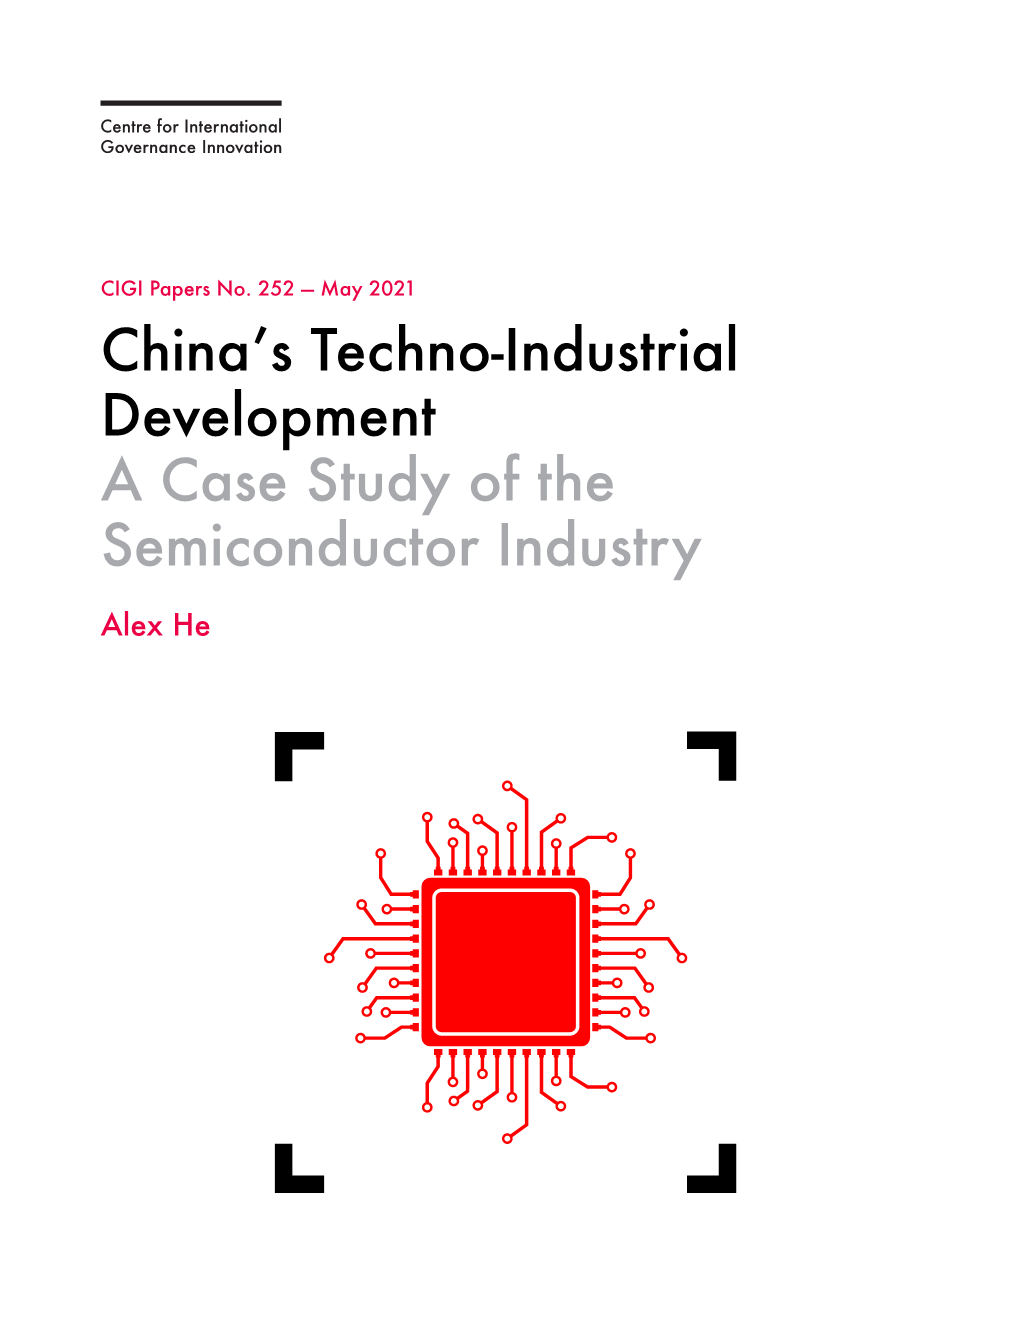 China's Techno-Industrial Development